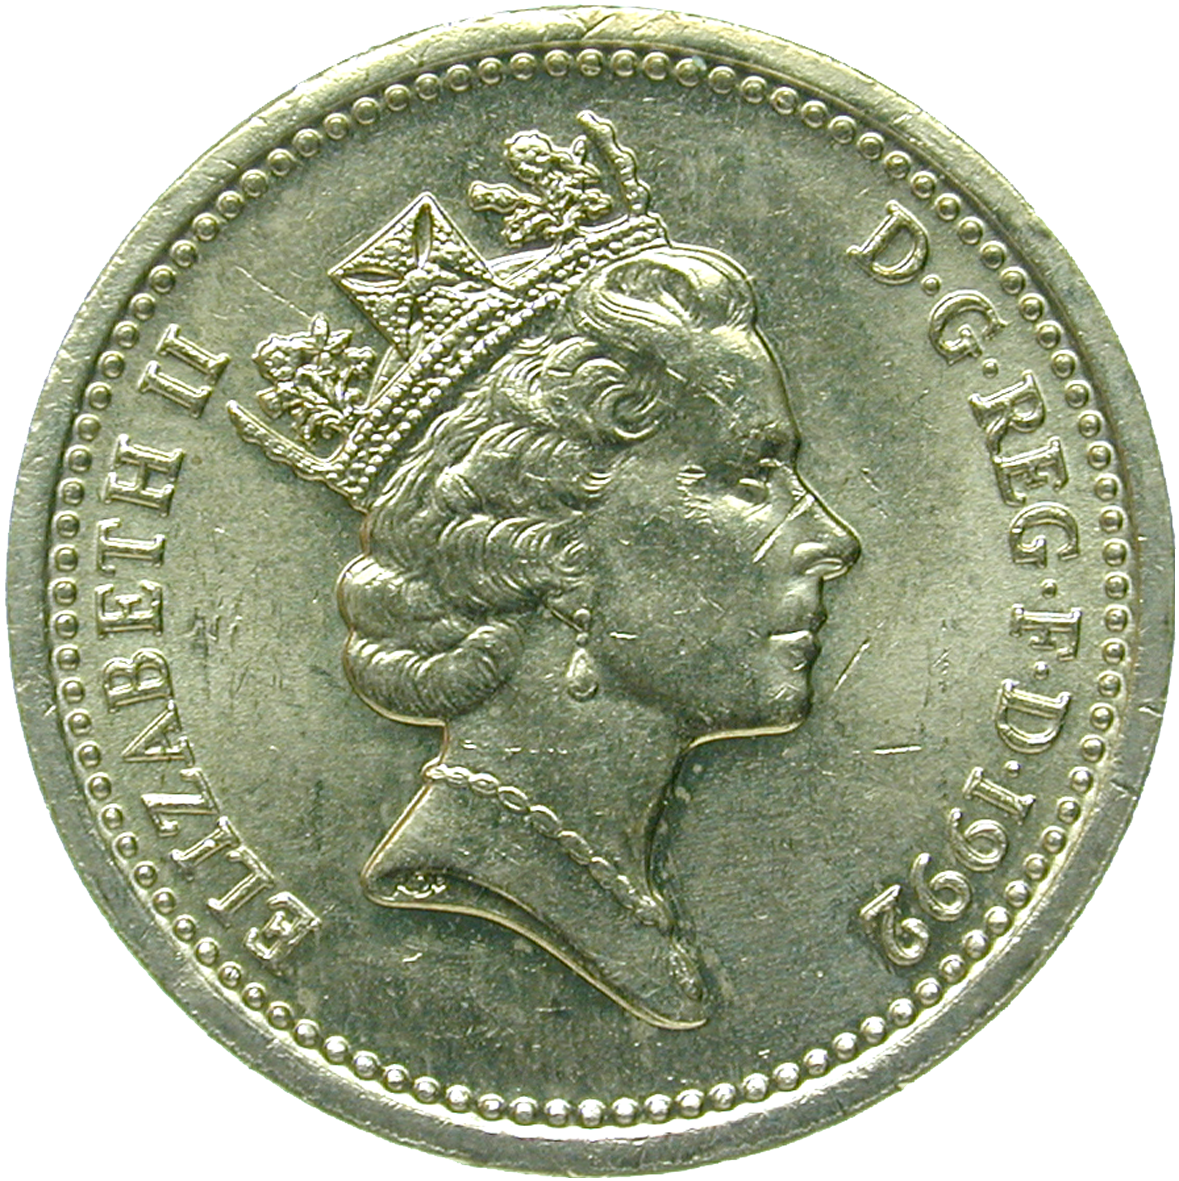 United Kingdom of Great Britain, Elizabeth II, 1 Pound 1992 (obverse)